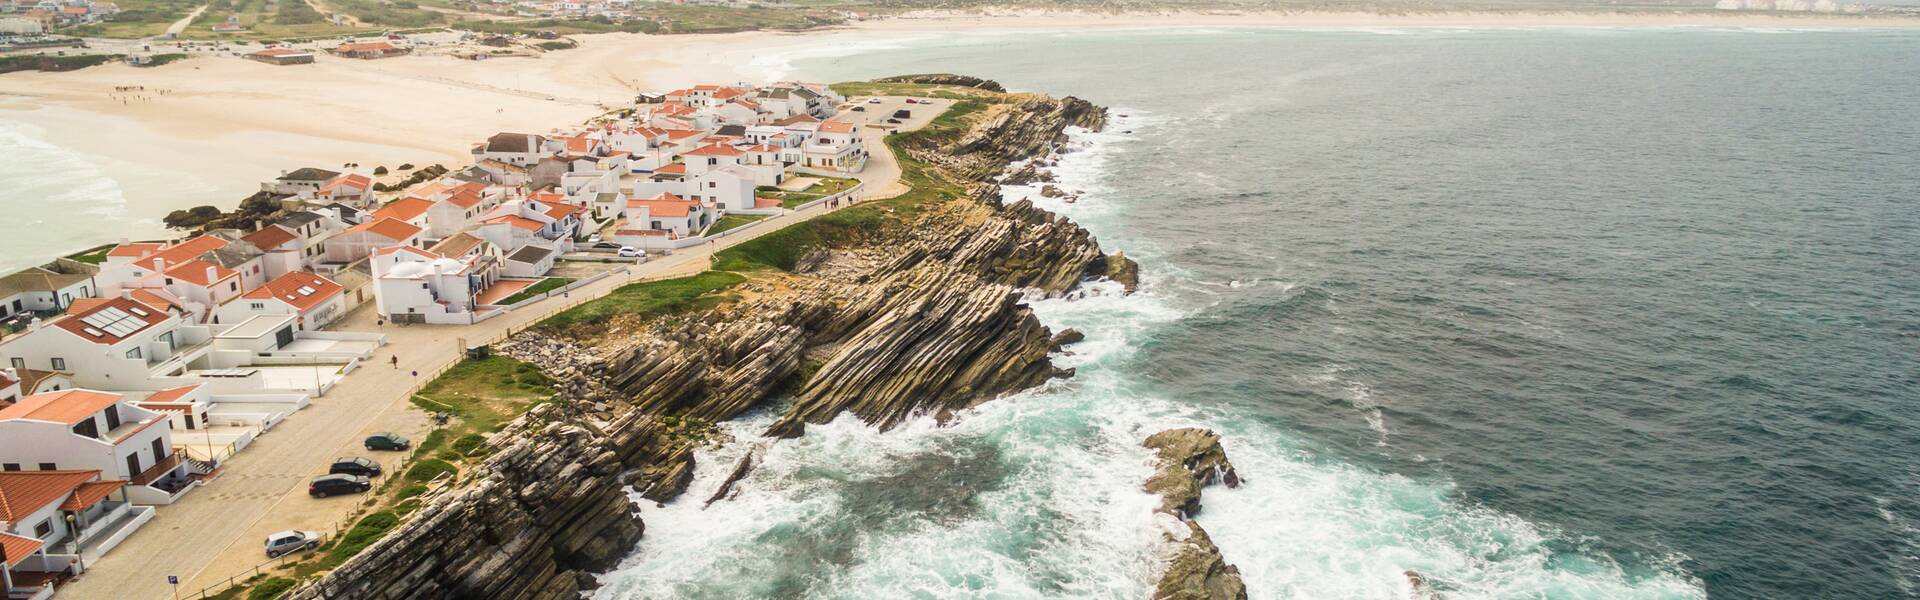 Westküste Portugal